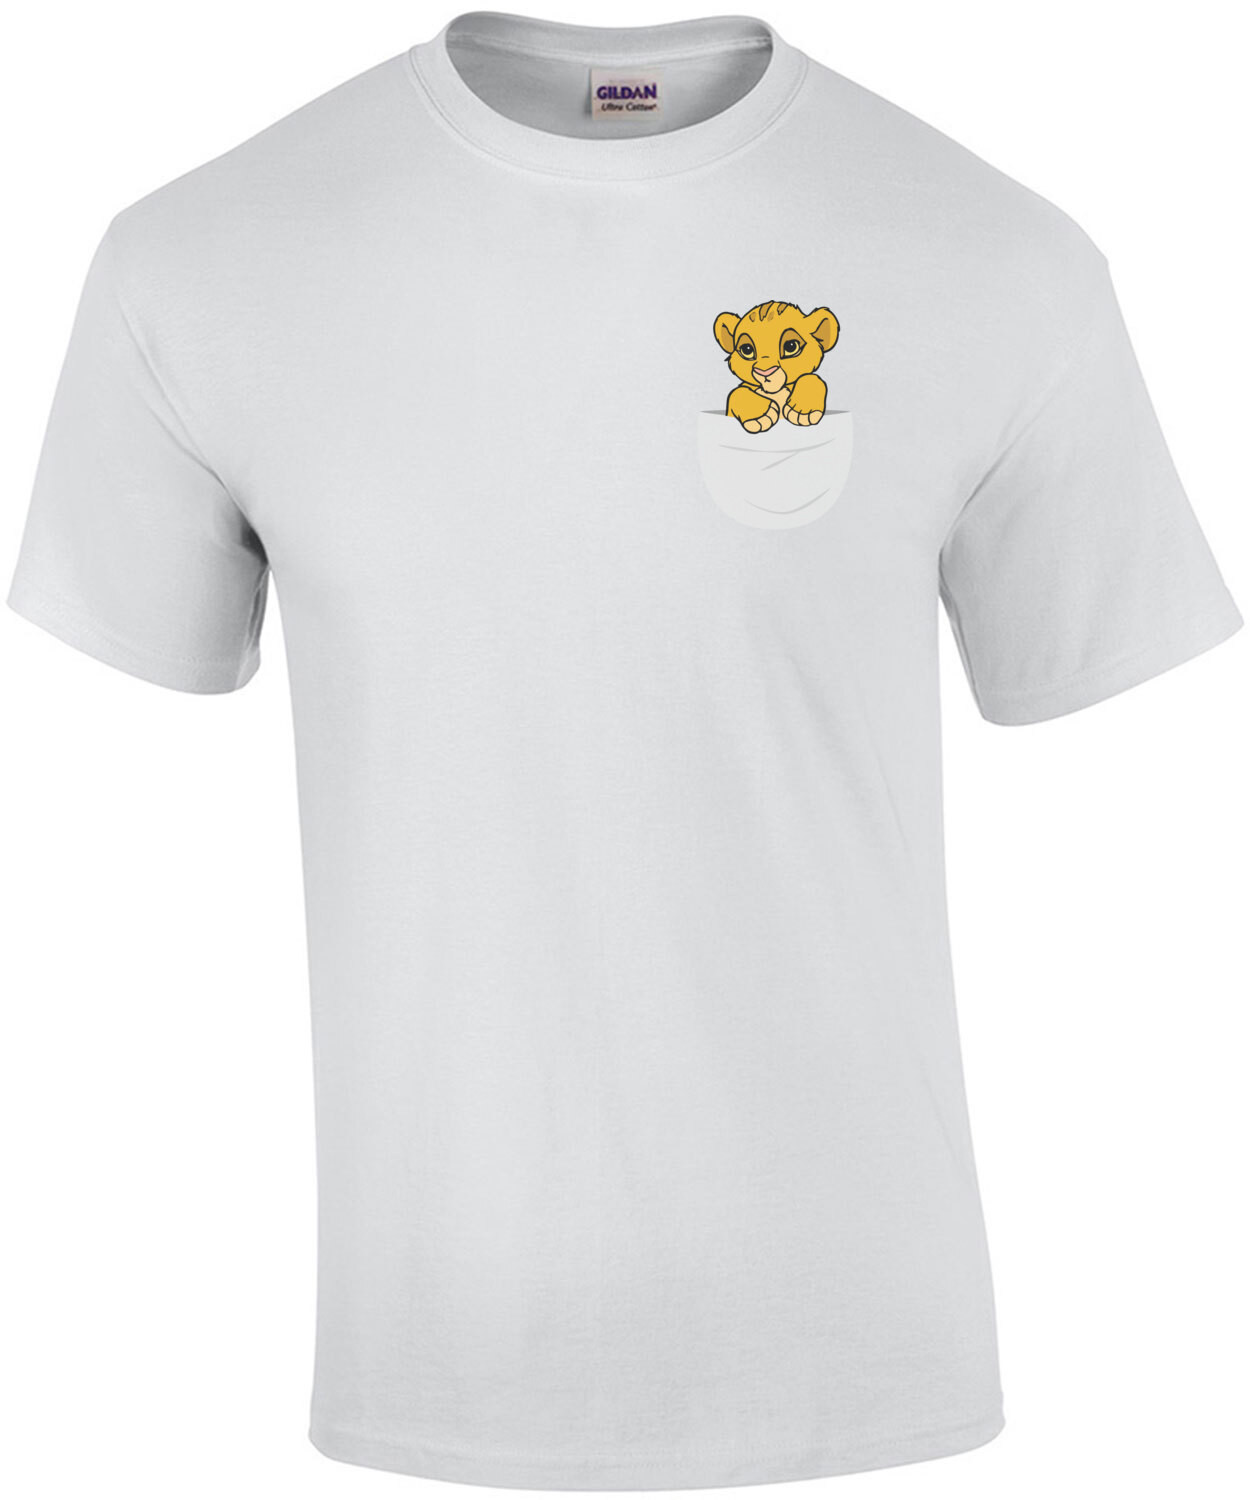 Simba in pocket - Lion King - 90's T-Shirt